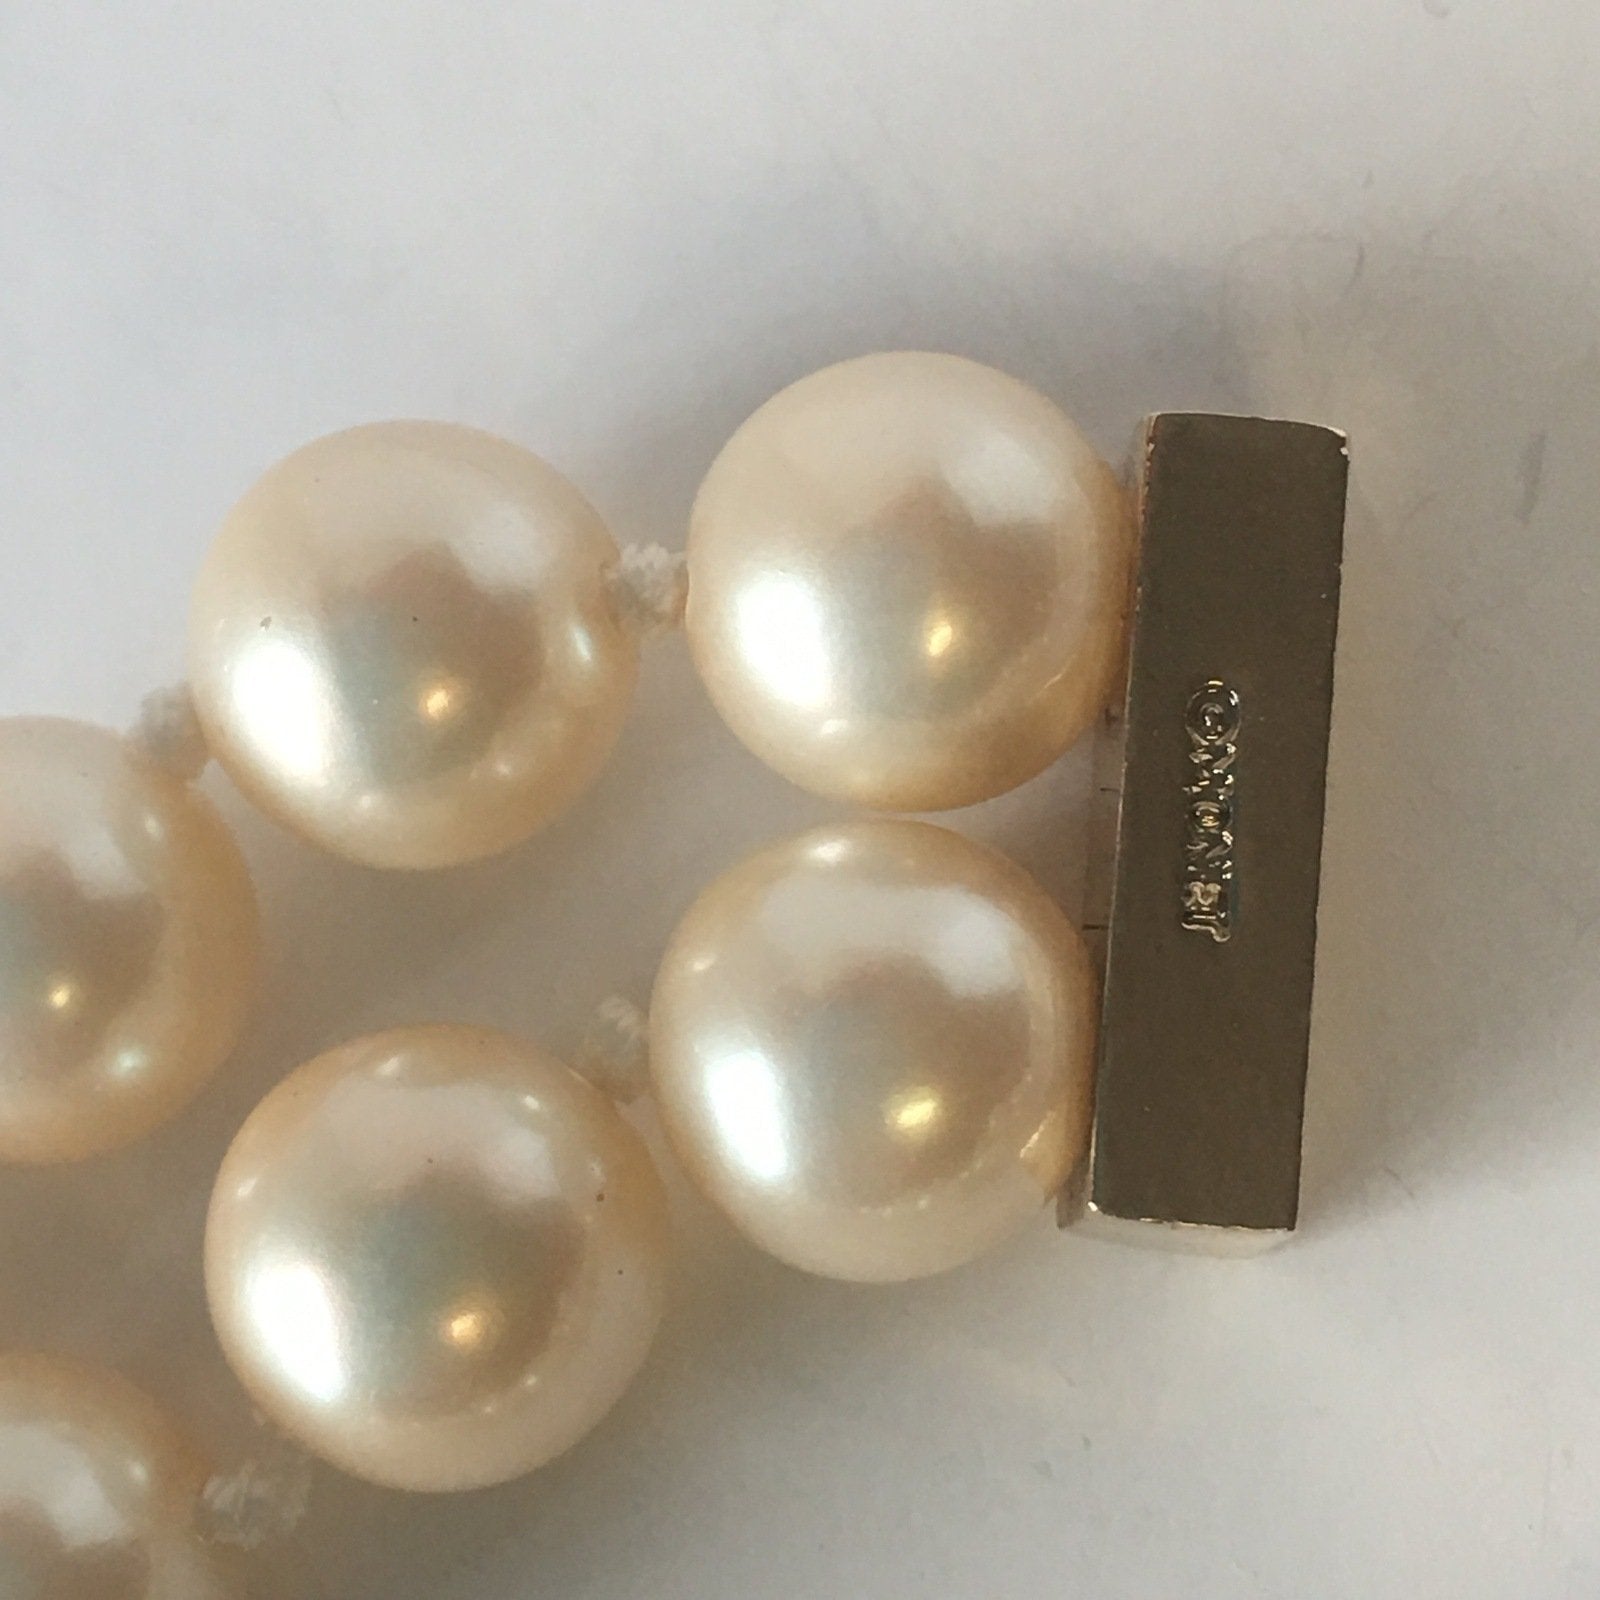 Monet Pearls Beaded Necklace Rhinestone Clasp Vintage Jewelry